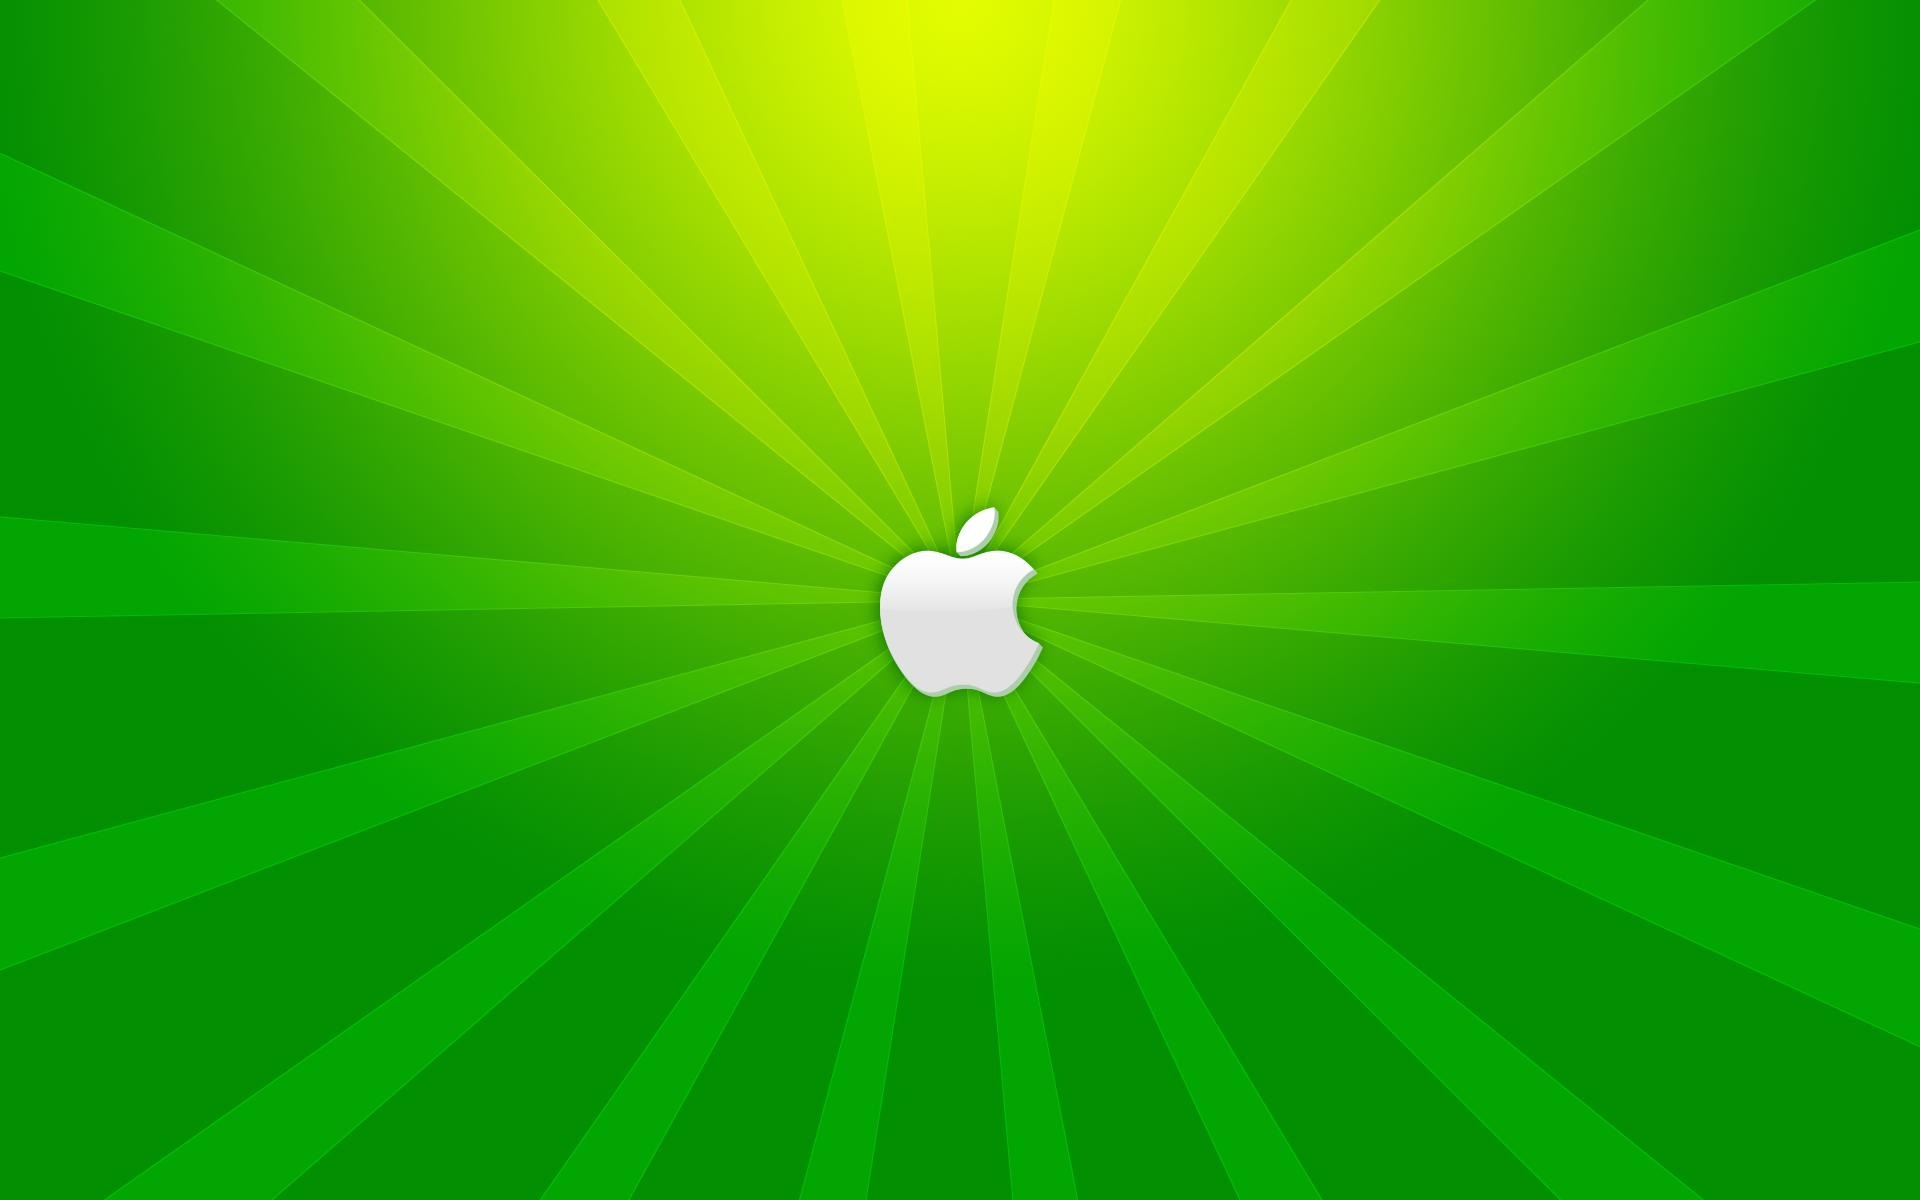 Green Apple Wallpaper Jpg